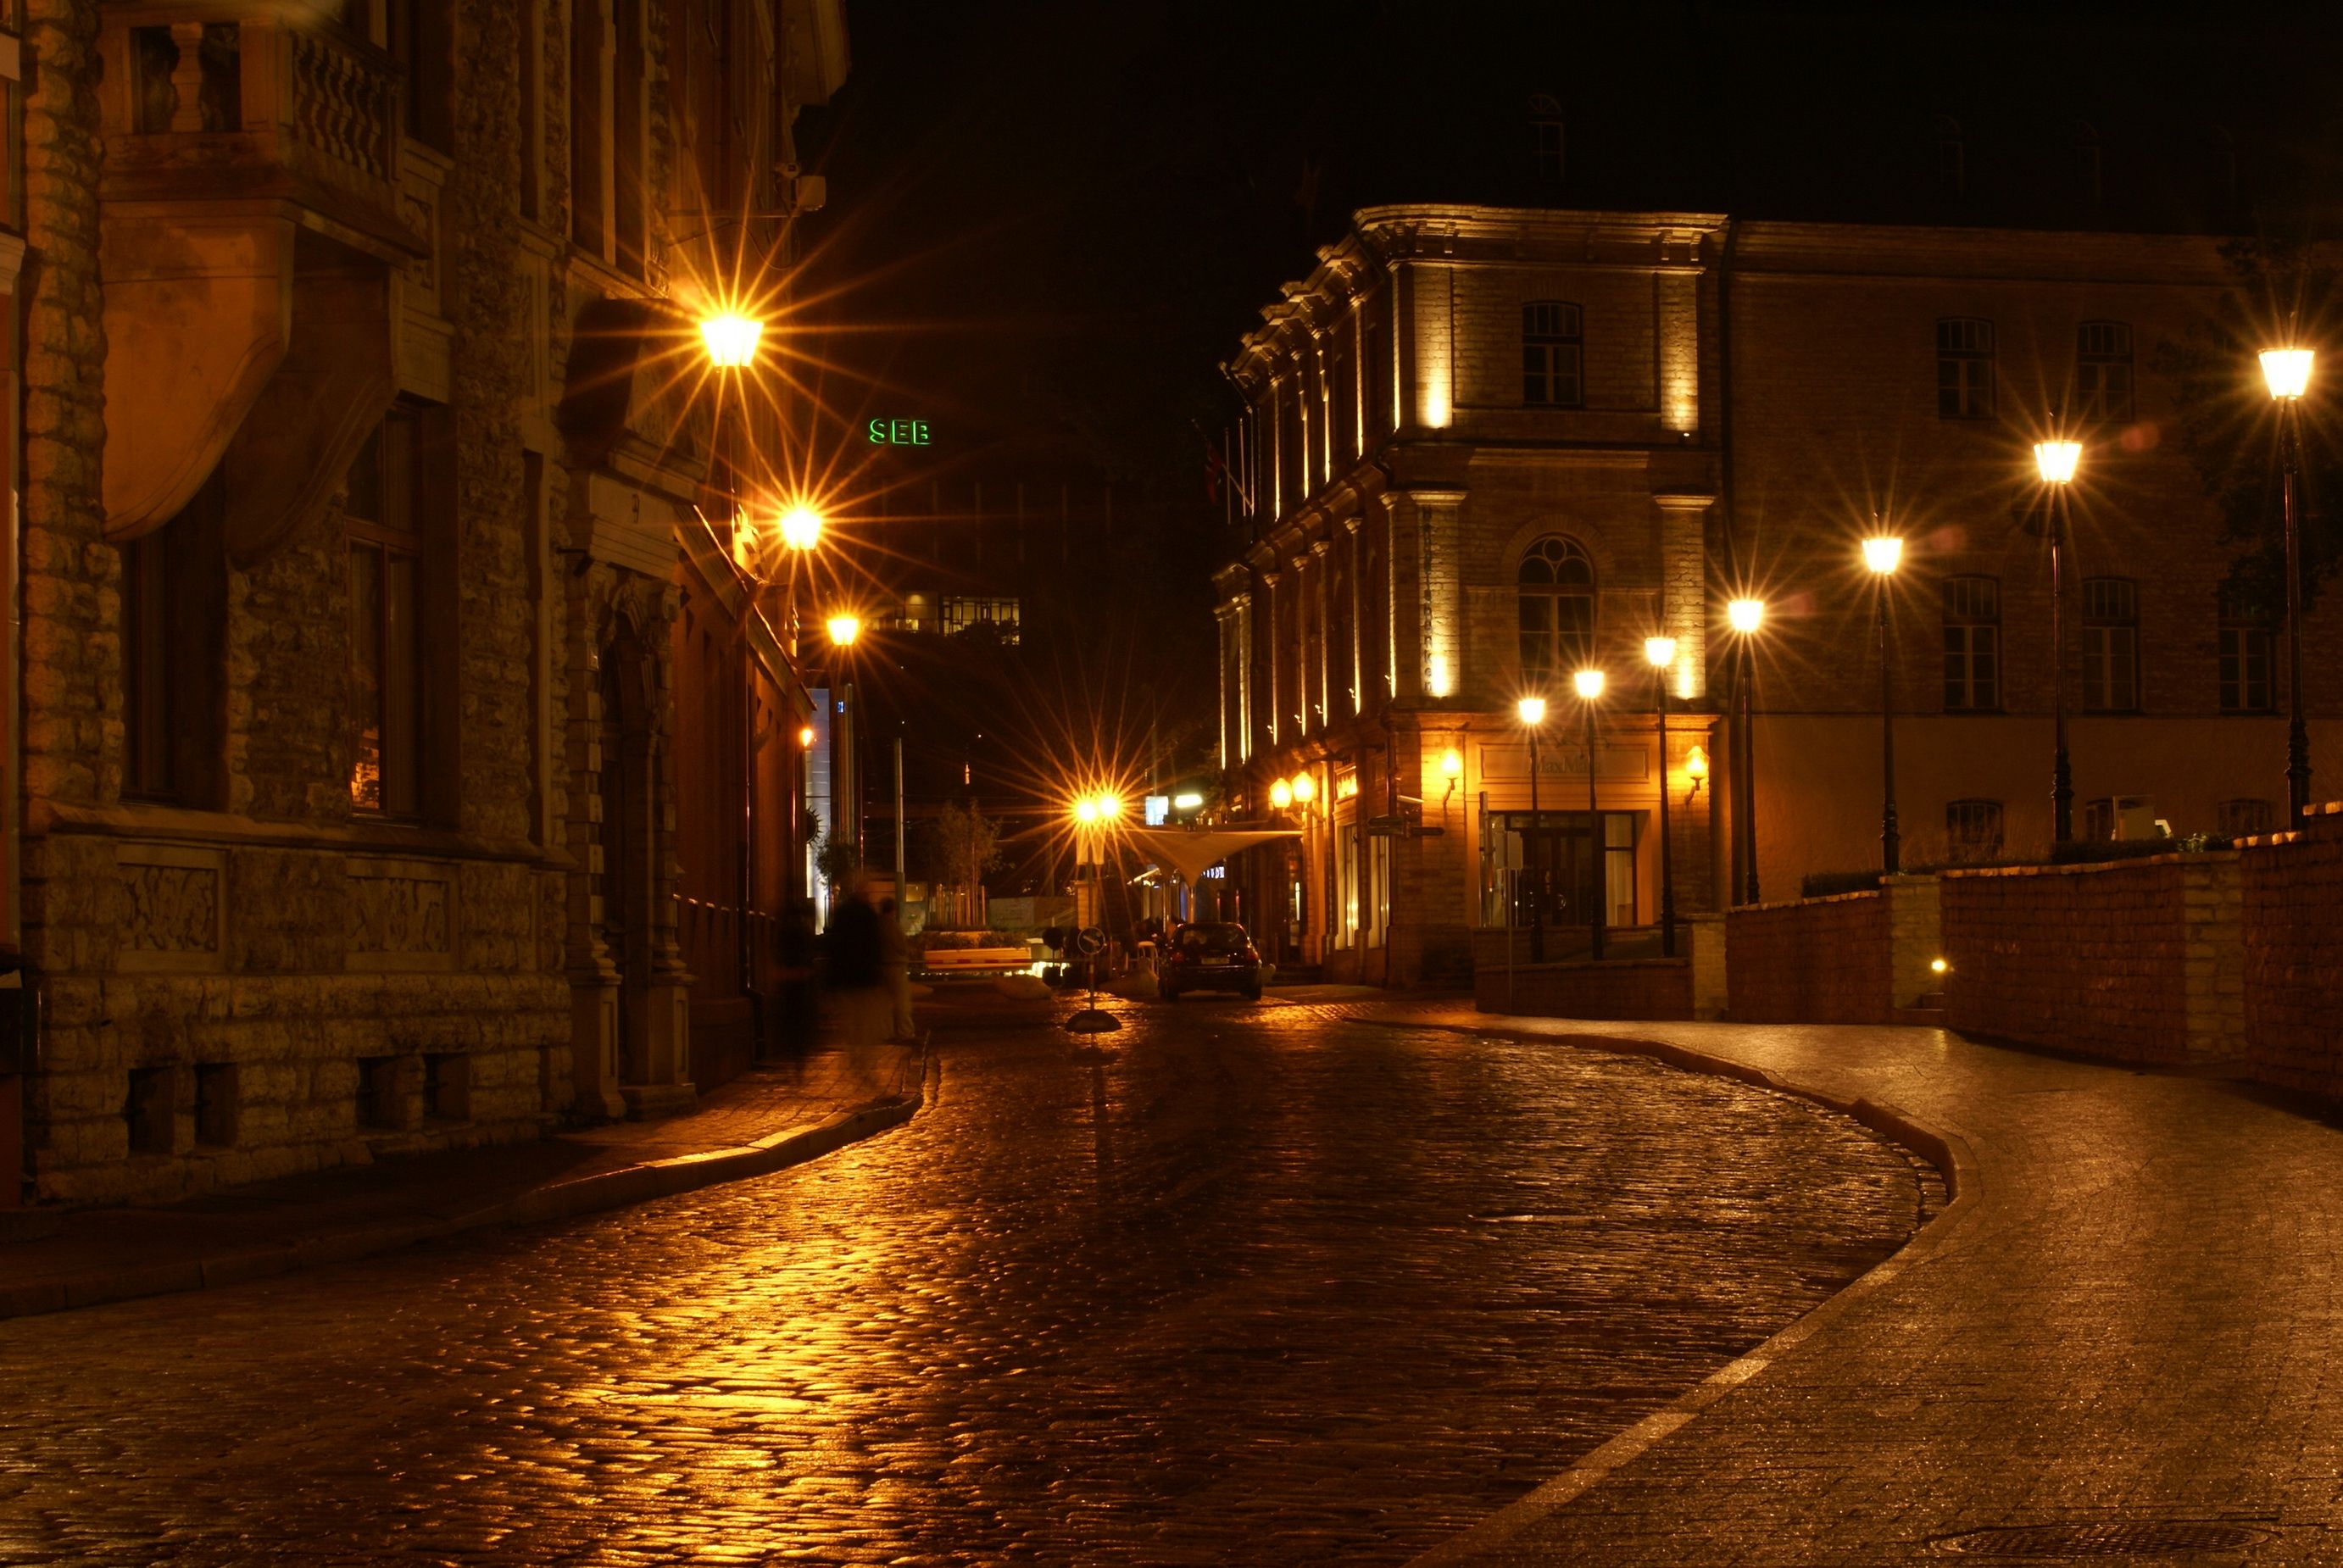 Baltic road. Street lights | street lights | Pinterest | Street ...